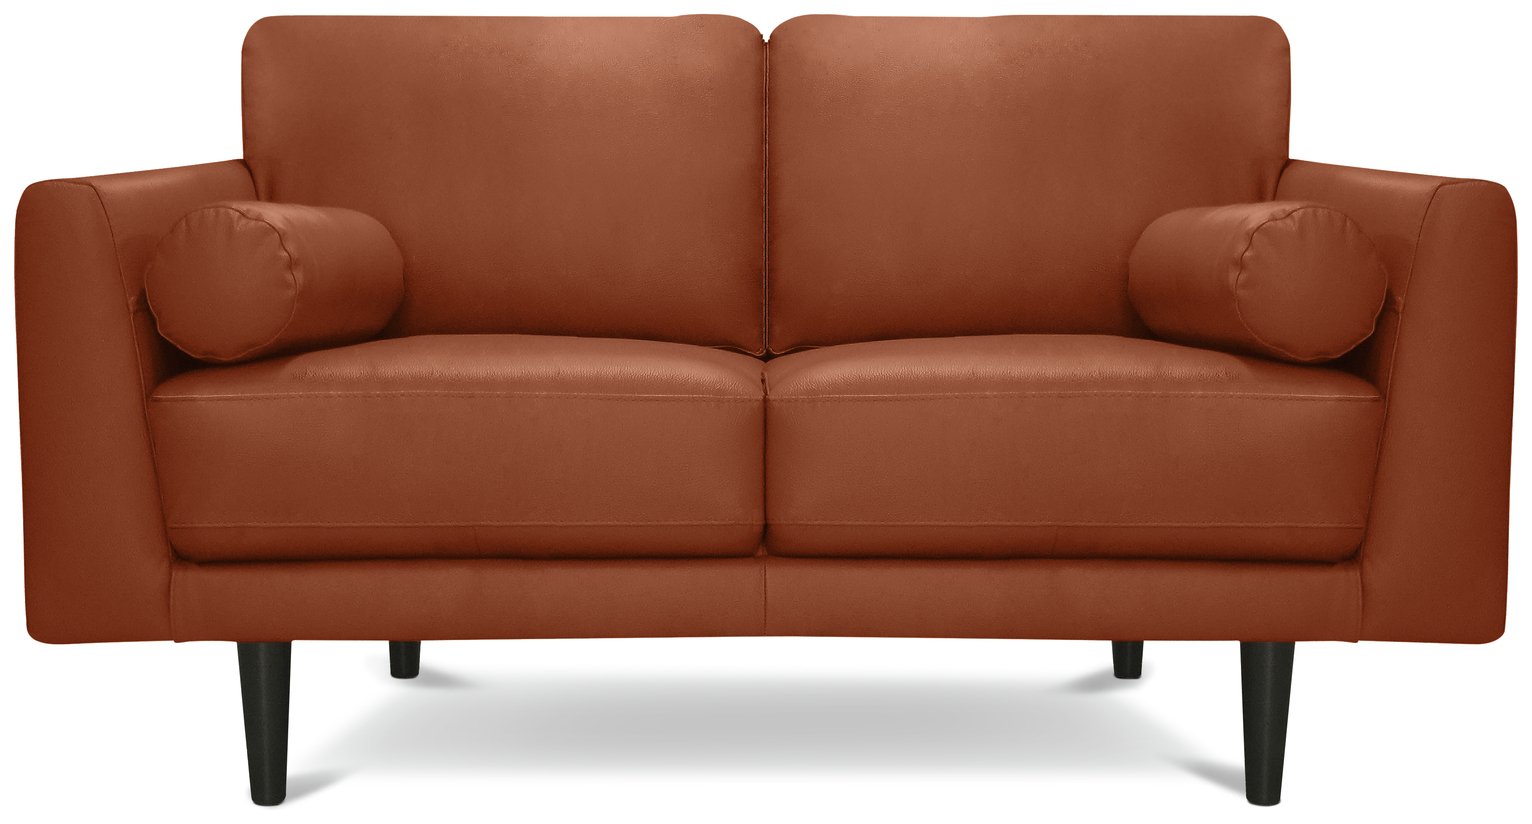 Habitat Jackson Leather 2 Seater Sofa - Tan